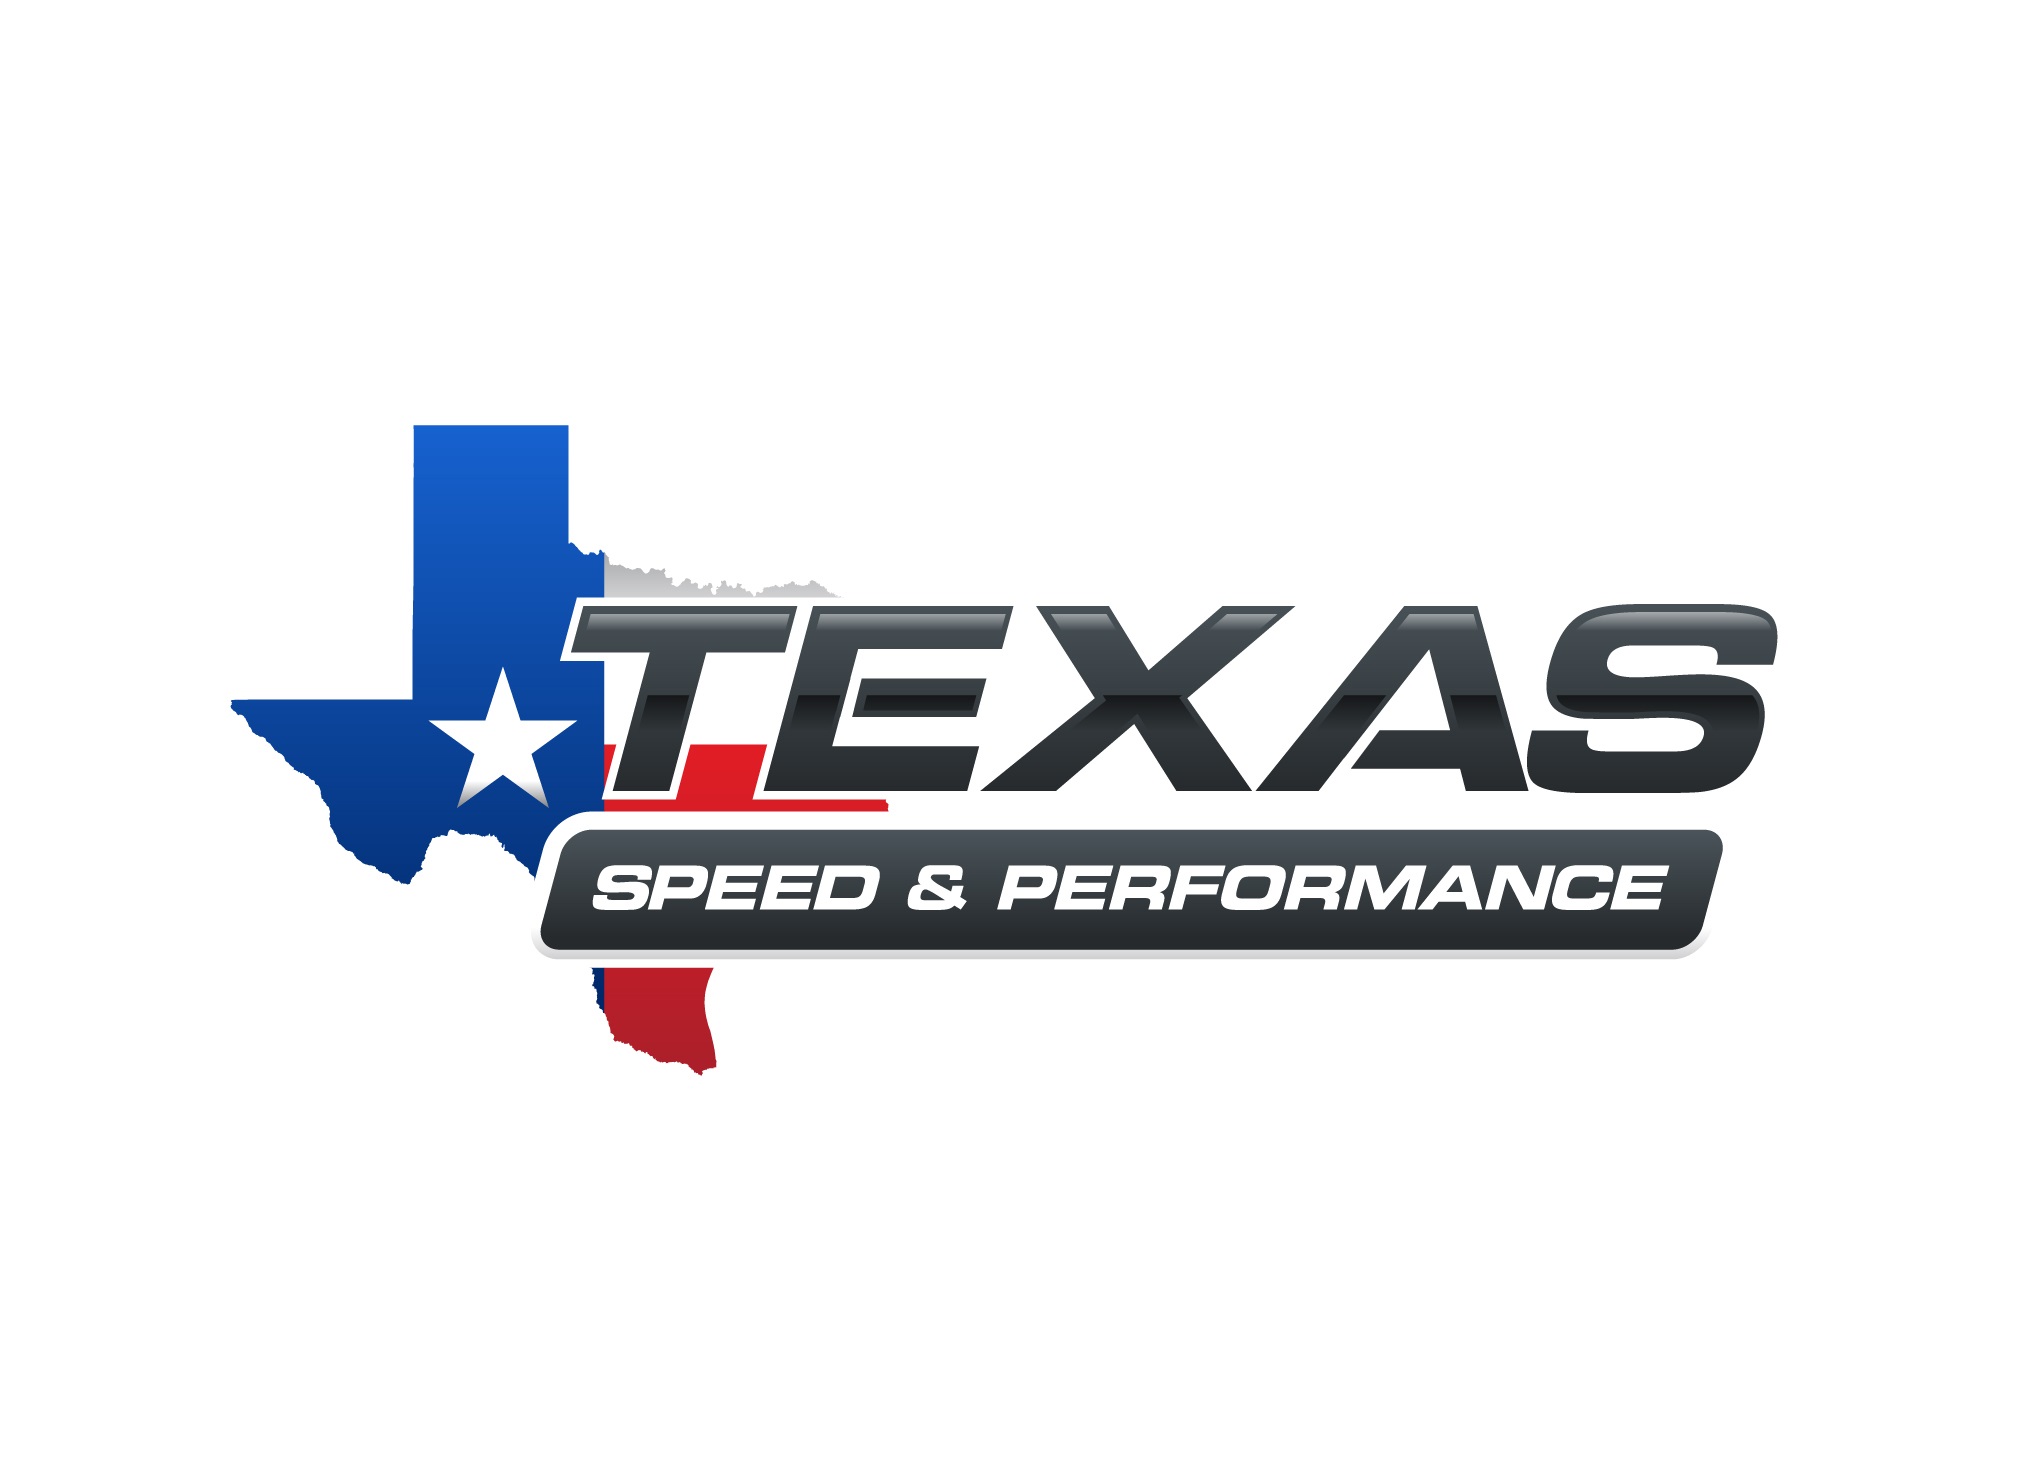 ls1tech.com Holley Katech Carbage Spec-D Optima OE Wheels Tuning QA1 Speartech Texas Speed Project Ron Burgundy LH6 swap V8 junkyard truck motor S10 autocross 